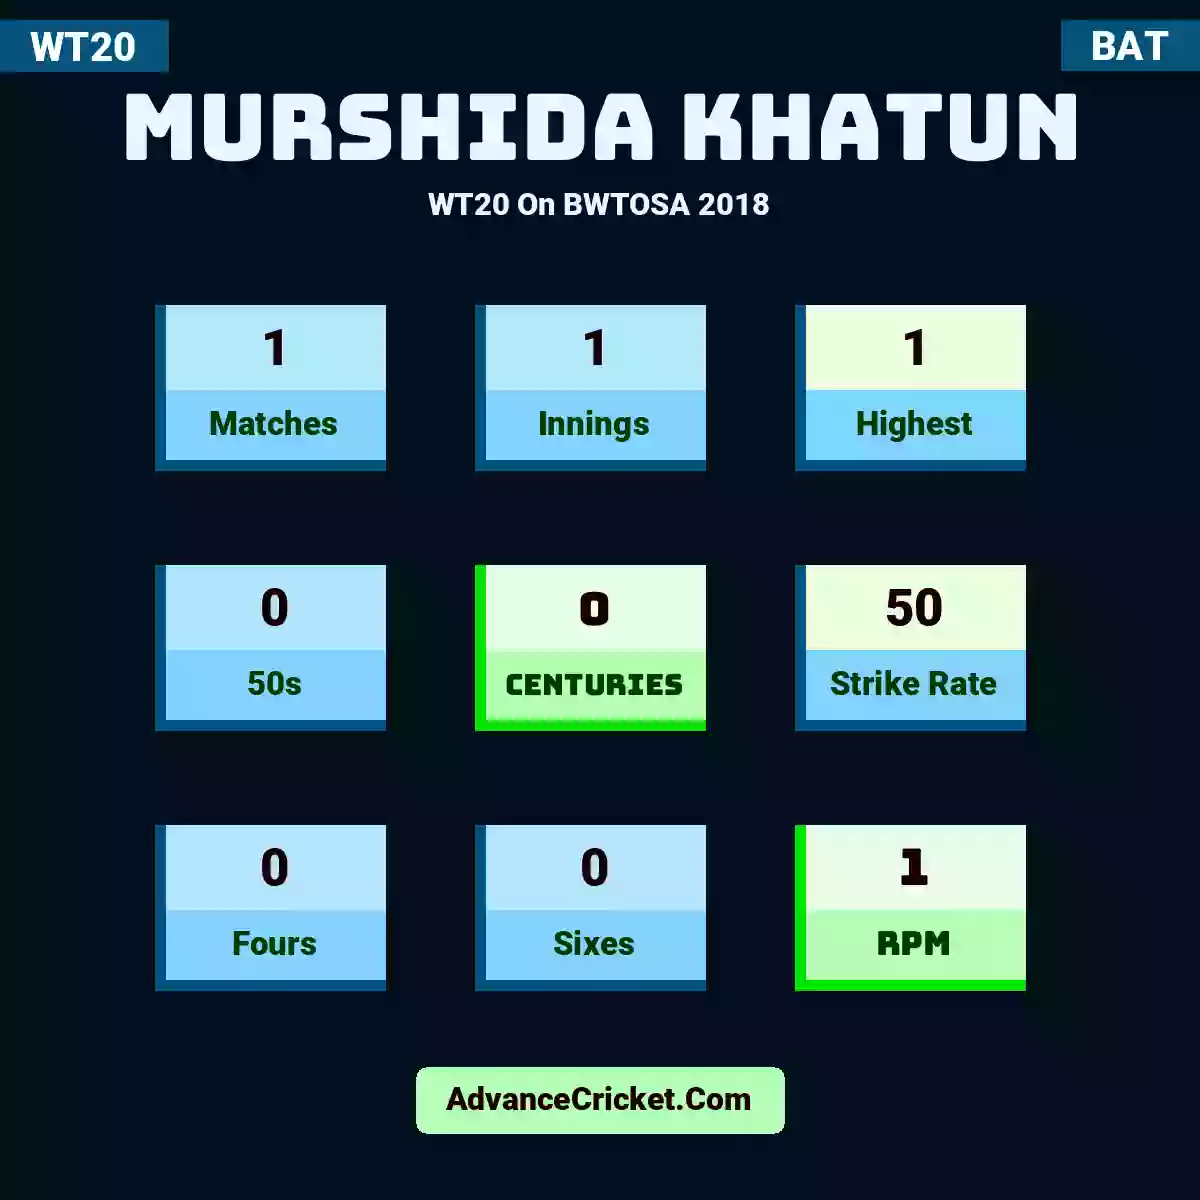 Murshida Khatun WT20  On BWTOSA 2018, Murshida Khatun played 1 matches, scored 1 runs as highest, 0 half-centuries, and 0 centuries, with a strike rate of 50. M.Khatun hit 0 fours and 0 sixes, with an RPM of 1.